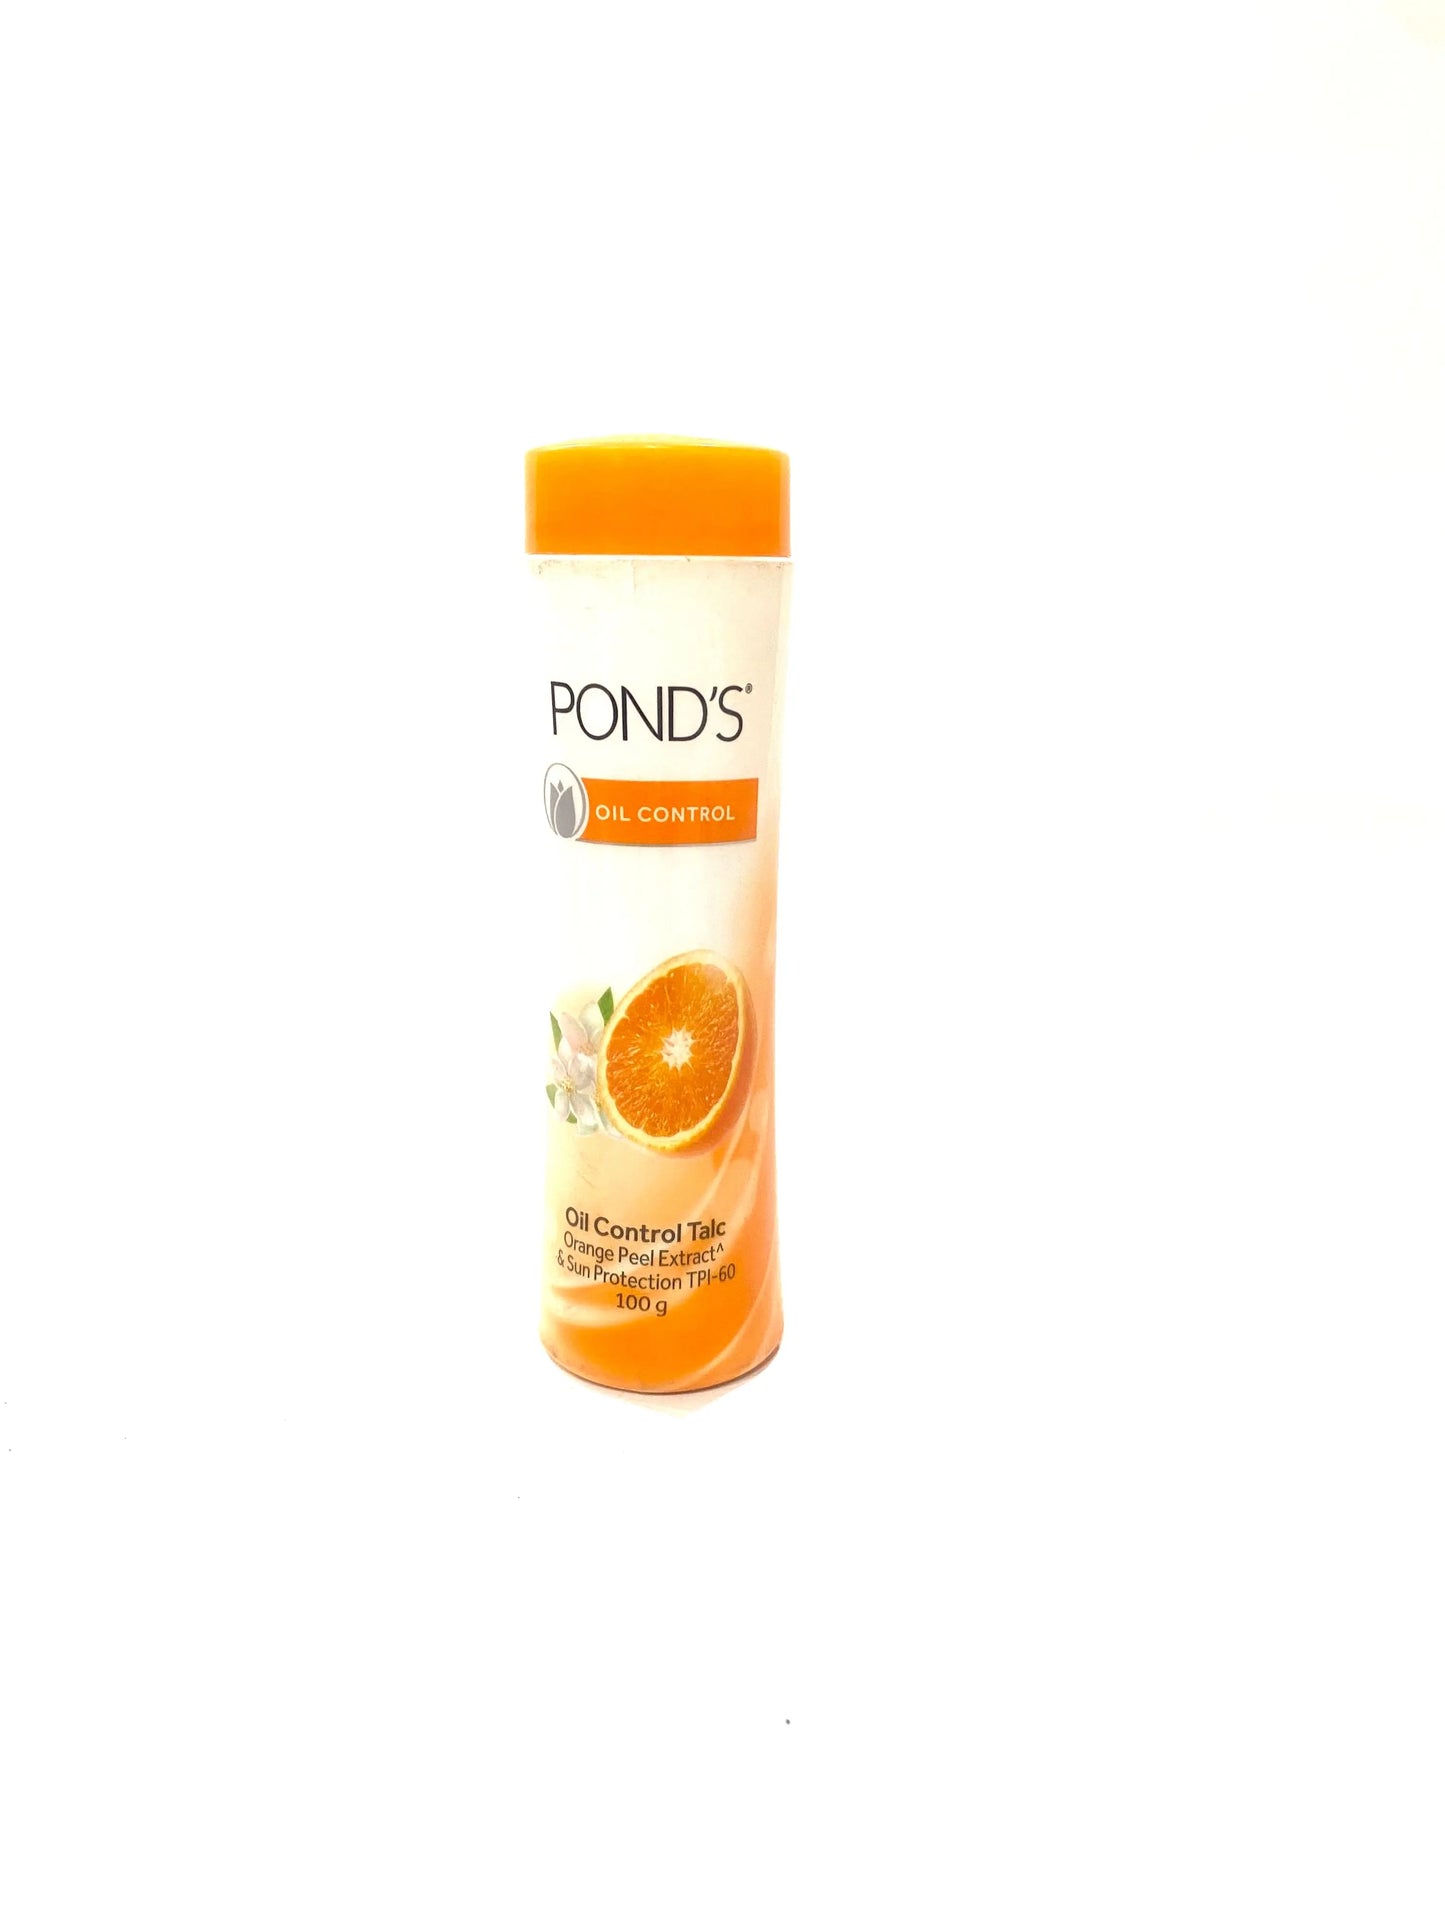 Pond’s Oil Control Talc/ Powder La Mimz Beauty & Fashion Store